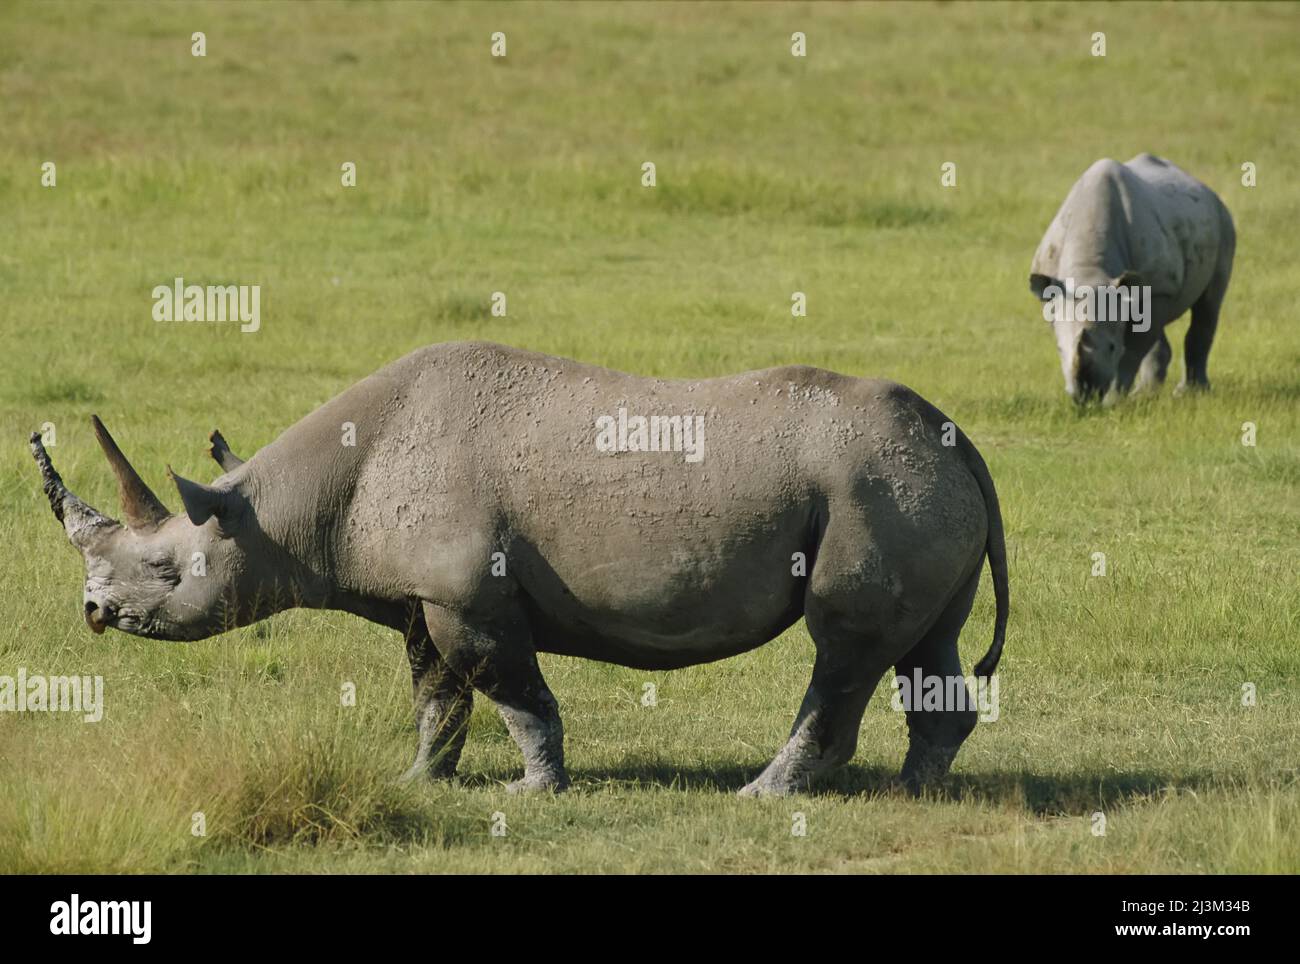 Rhinoceroses in Ngorongnoro Crater, Tanzania.; NGORONGORO CRATER, TANZANIA. Stock Photo